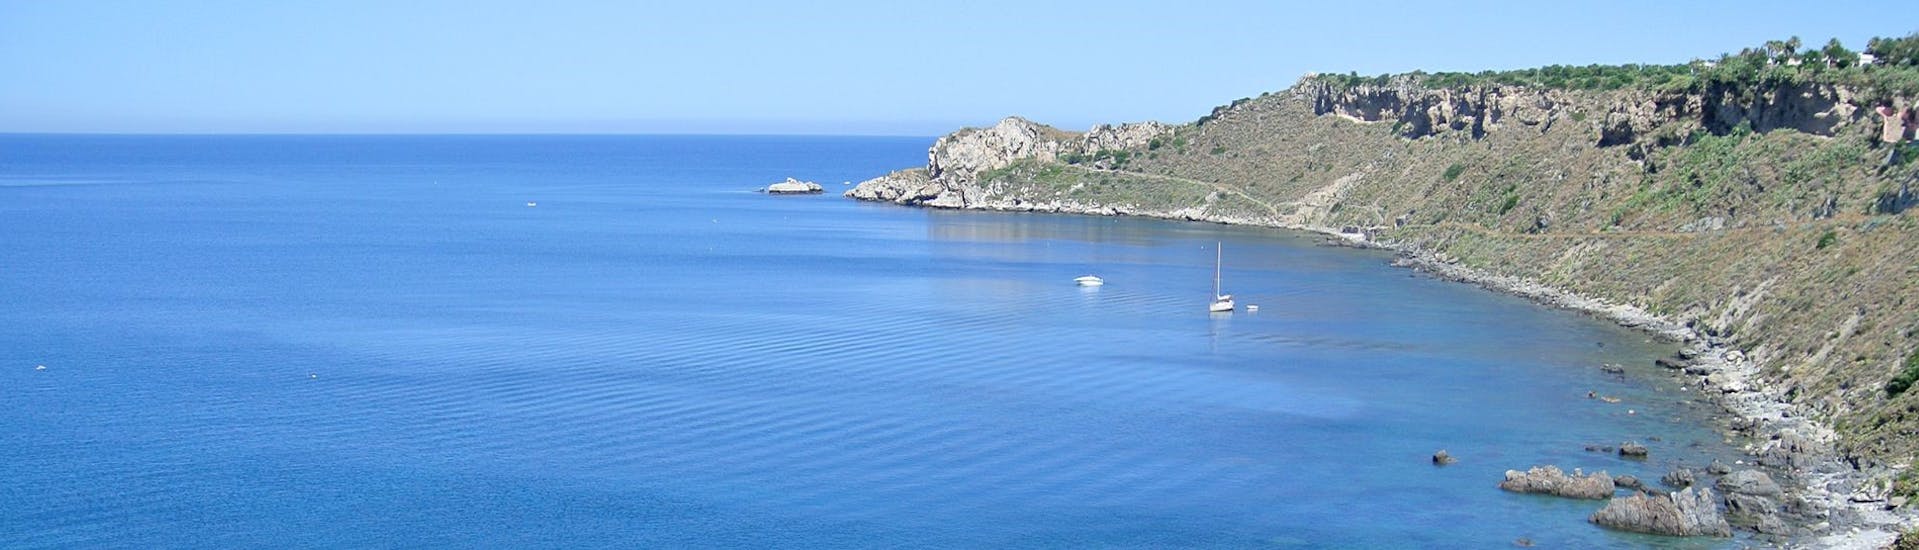 Vue du bateau de Sky Sea Charter pendant la Balade privée en bateau de Milazzo à Panarea et Stromboli.